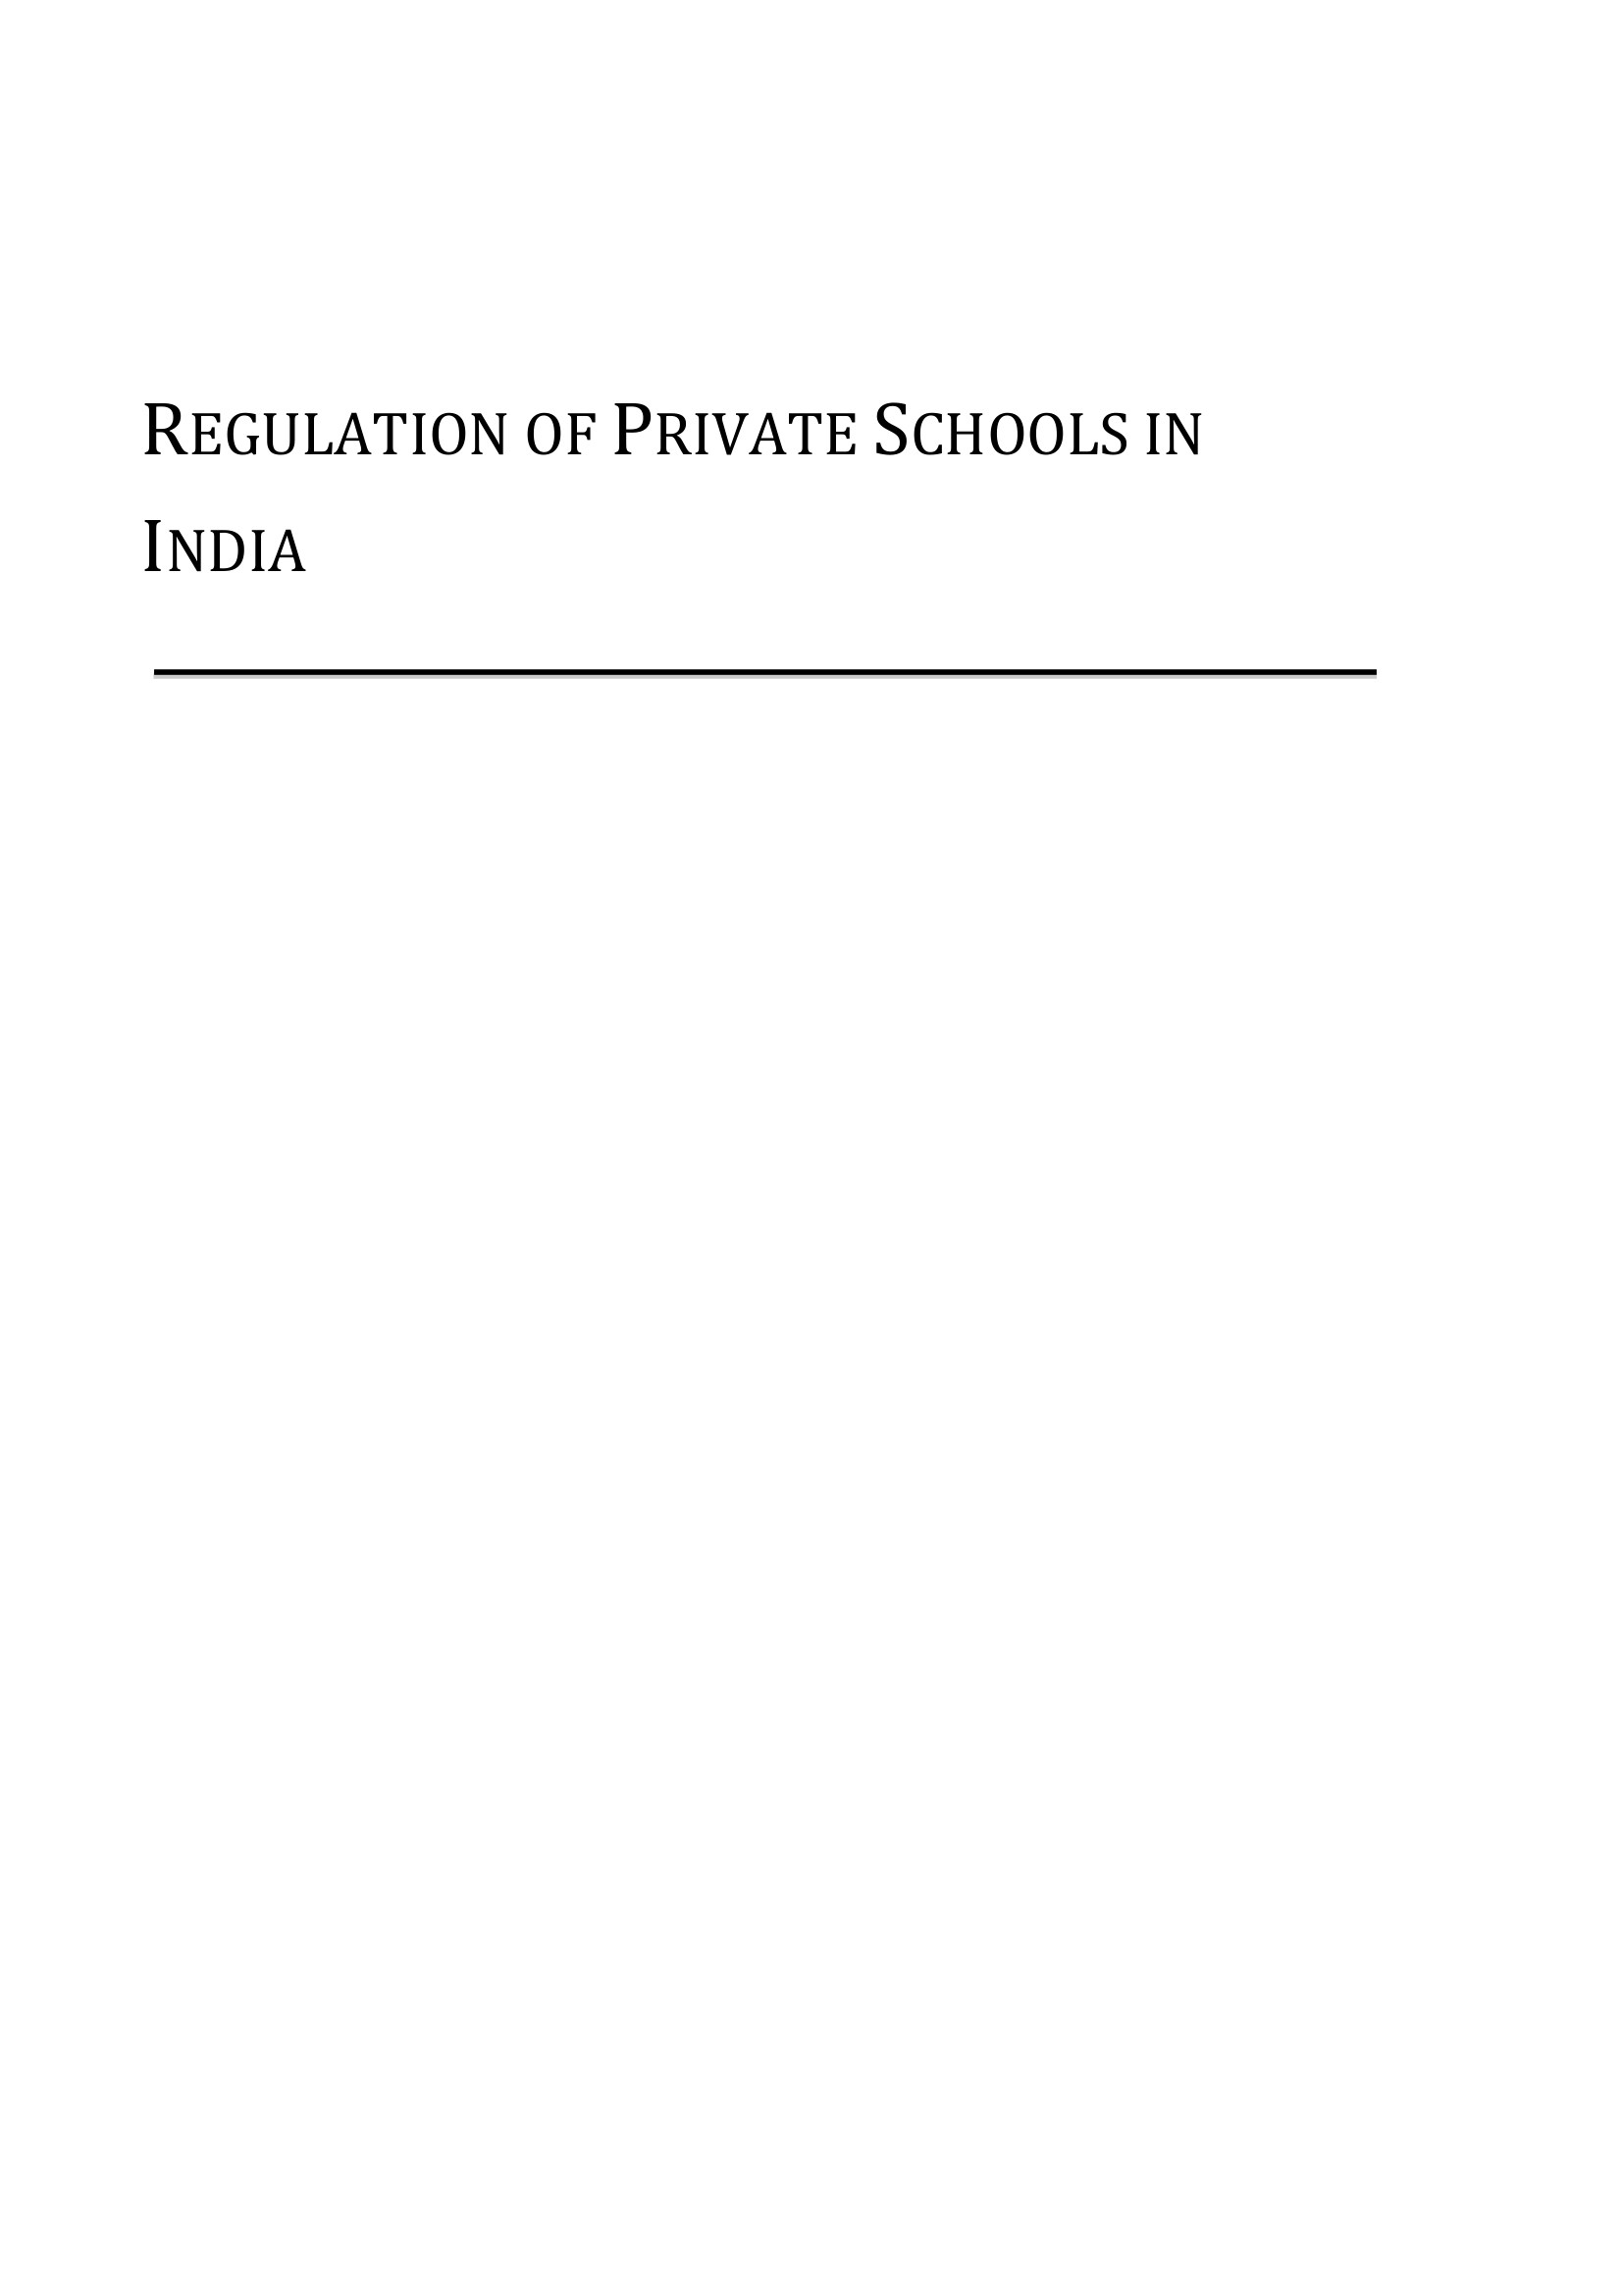 Regulation of Private Schools